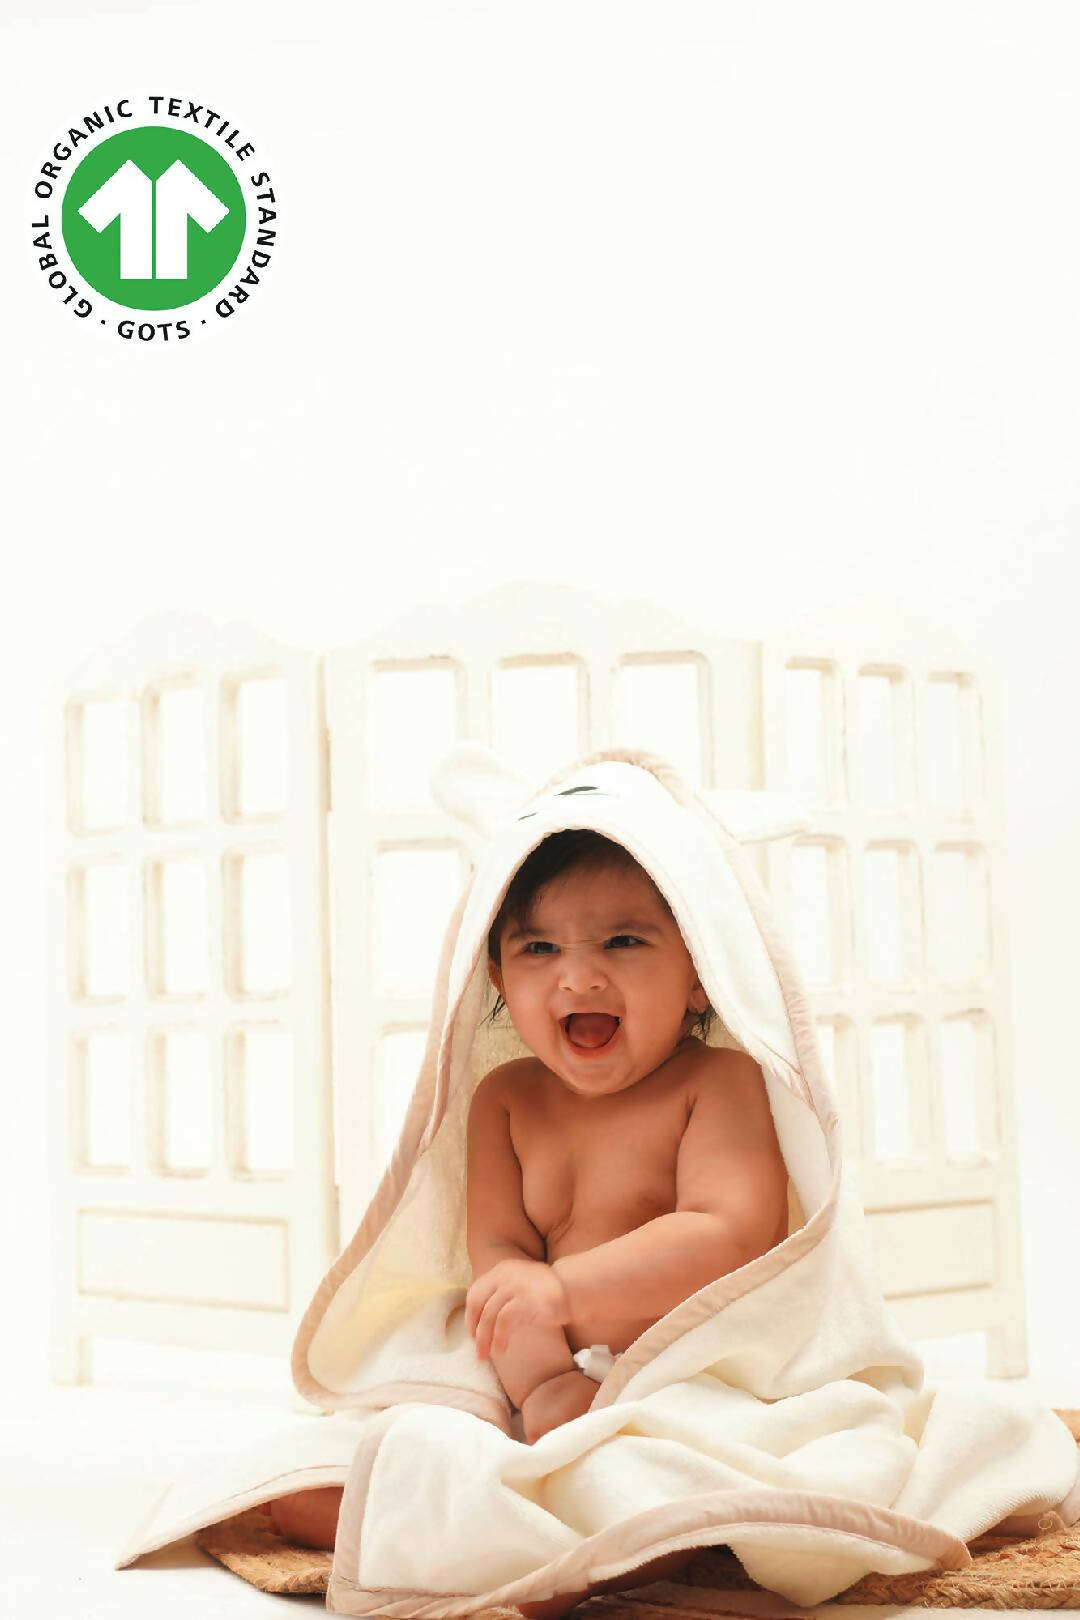 Greendigo Organic Cotton Unisex Hooded Baby Bath Towel for baby boys and baby girls 4